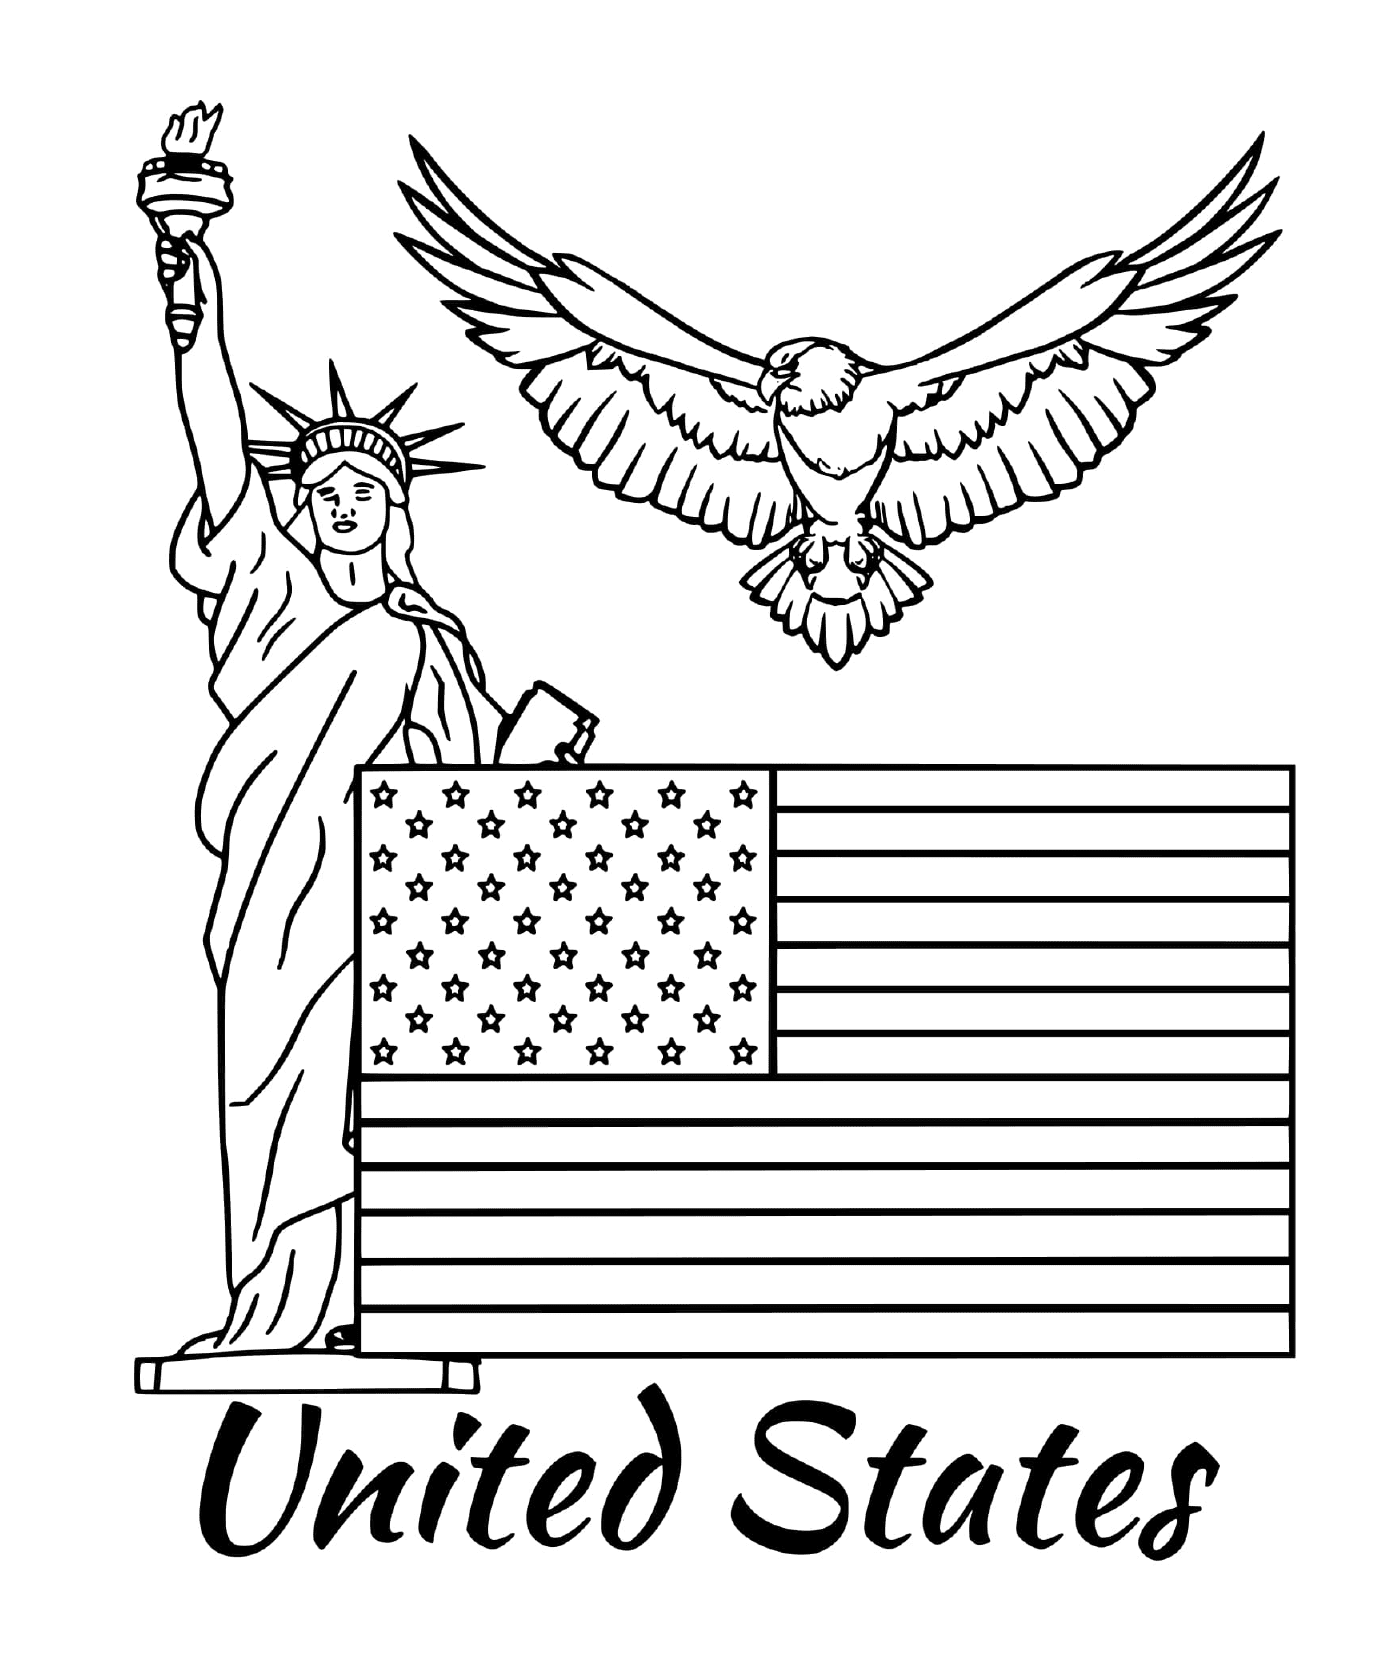  United States flag 